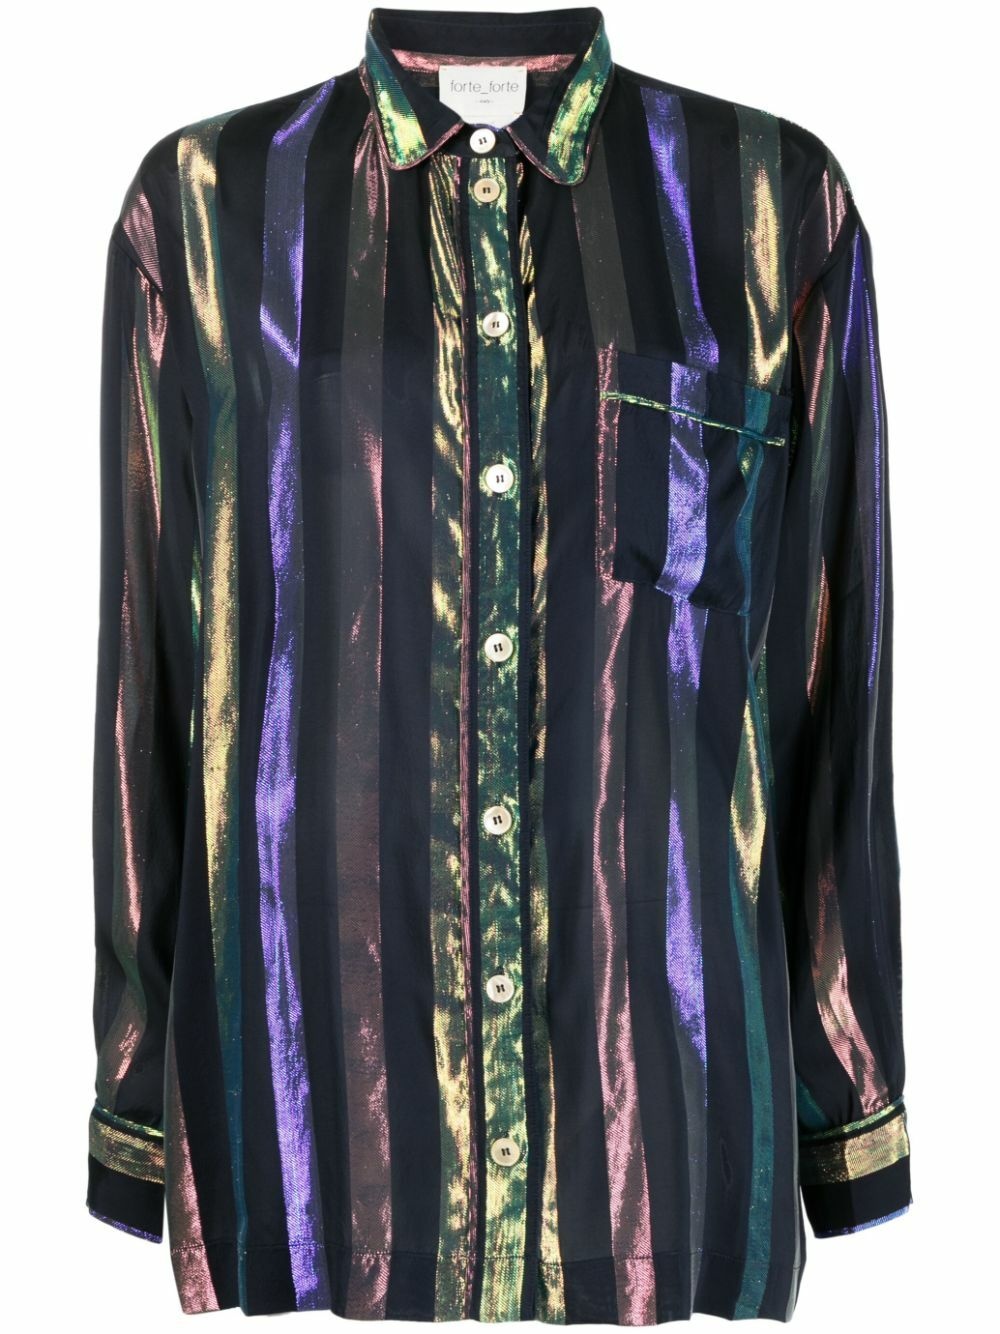 Photo: FORTE FORTE - Silk Blend Pajama Shirt